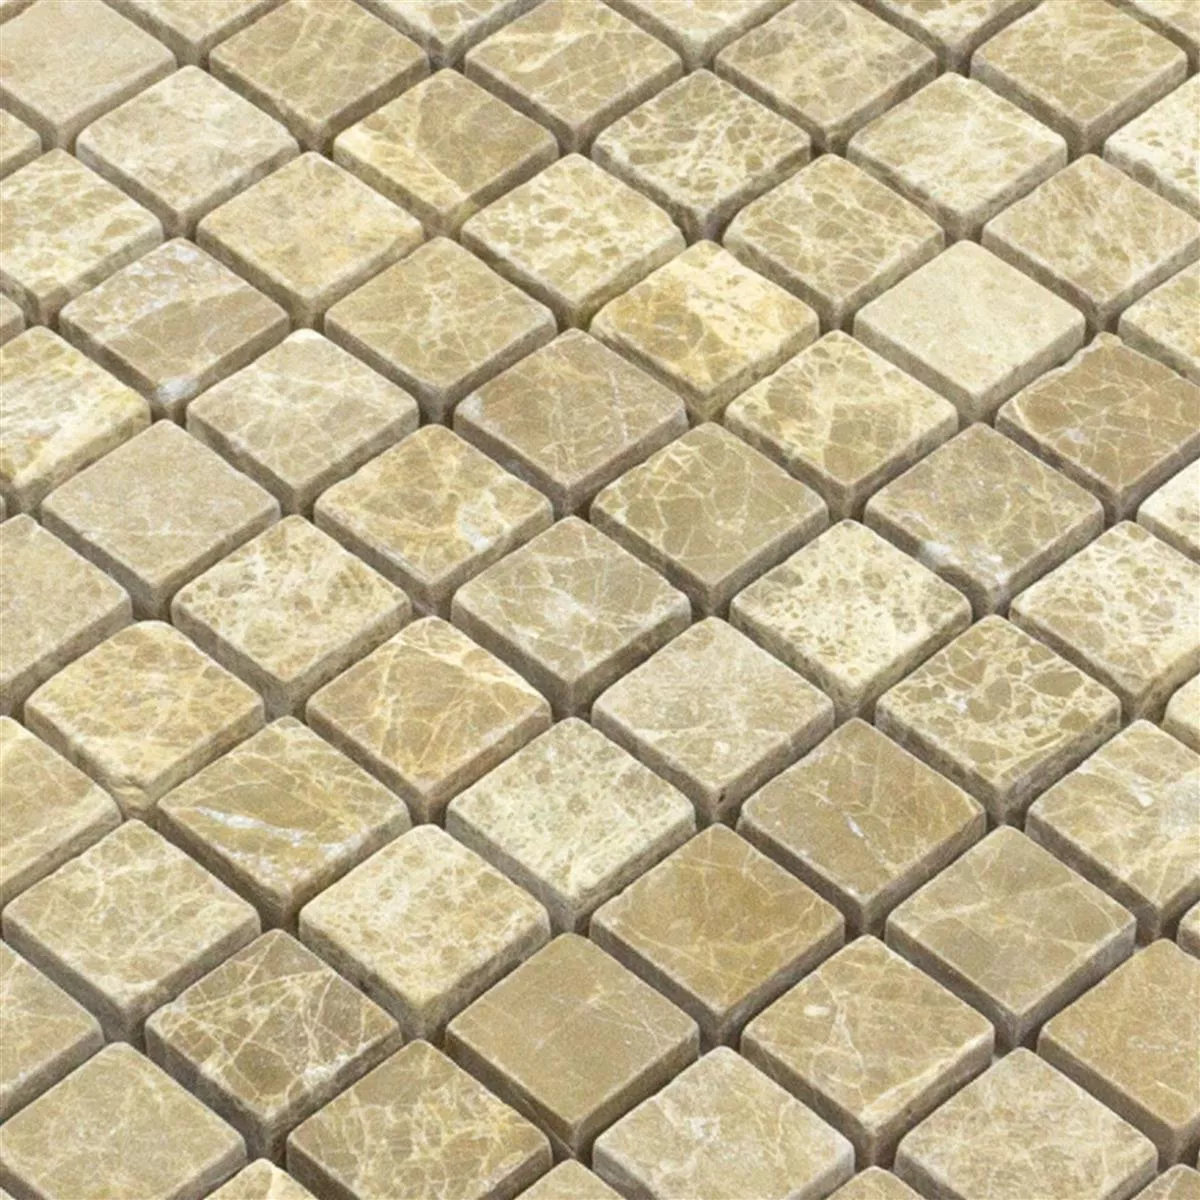 Uzorak Mramor Mozaik Od Prirodnog Kamena Pločice Menia Bež